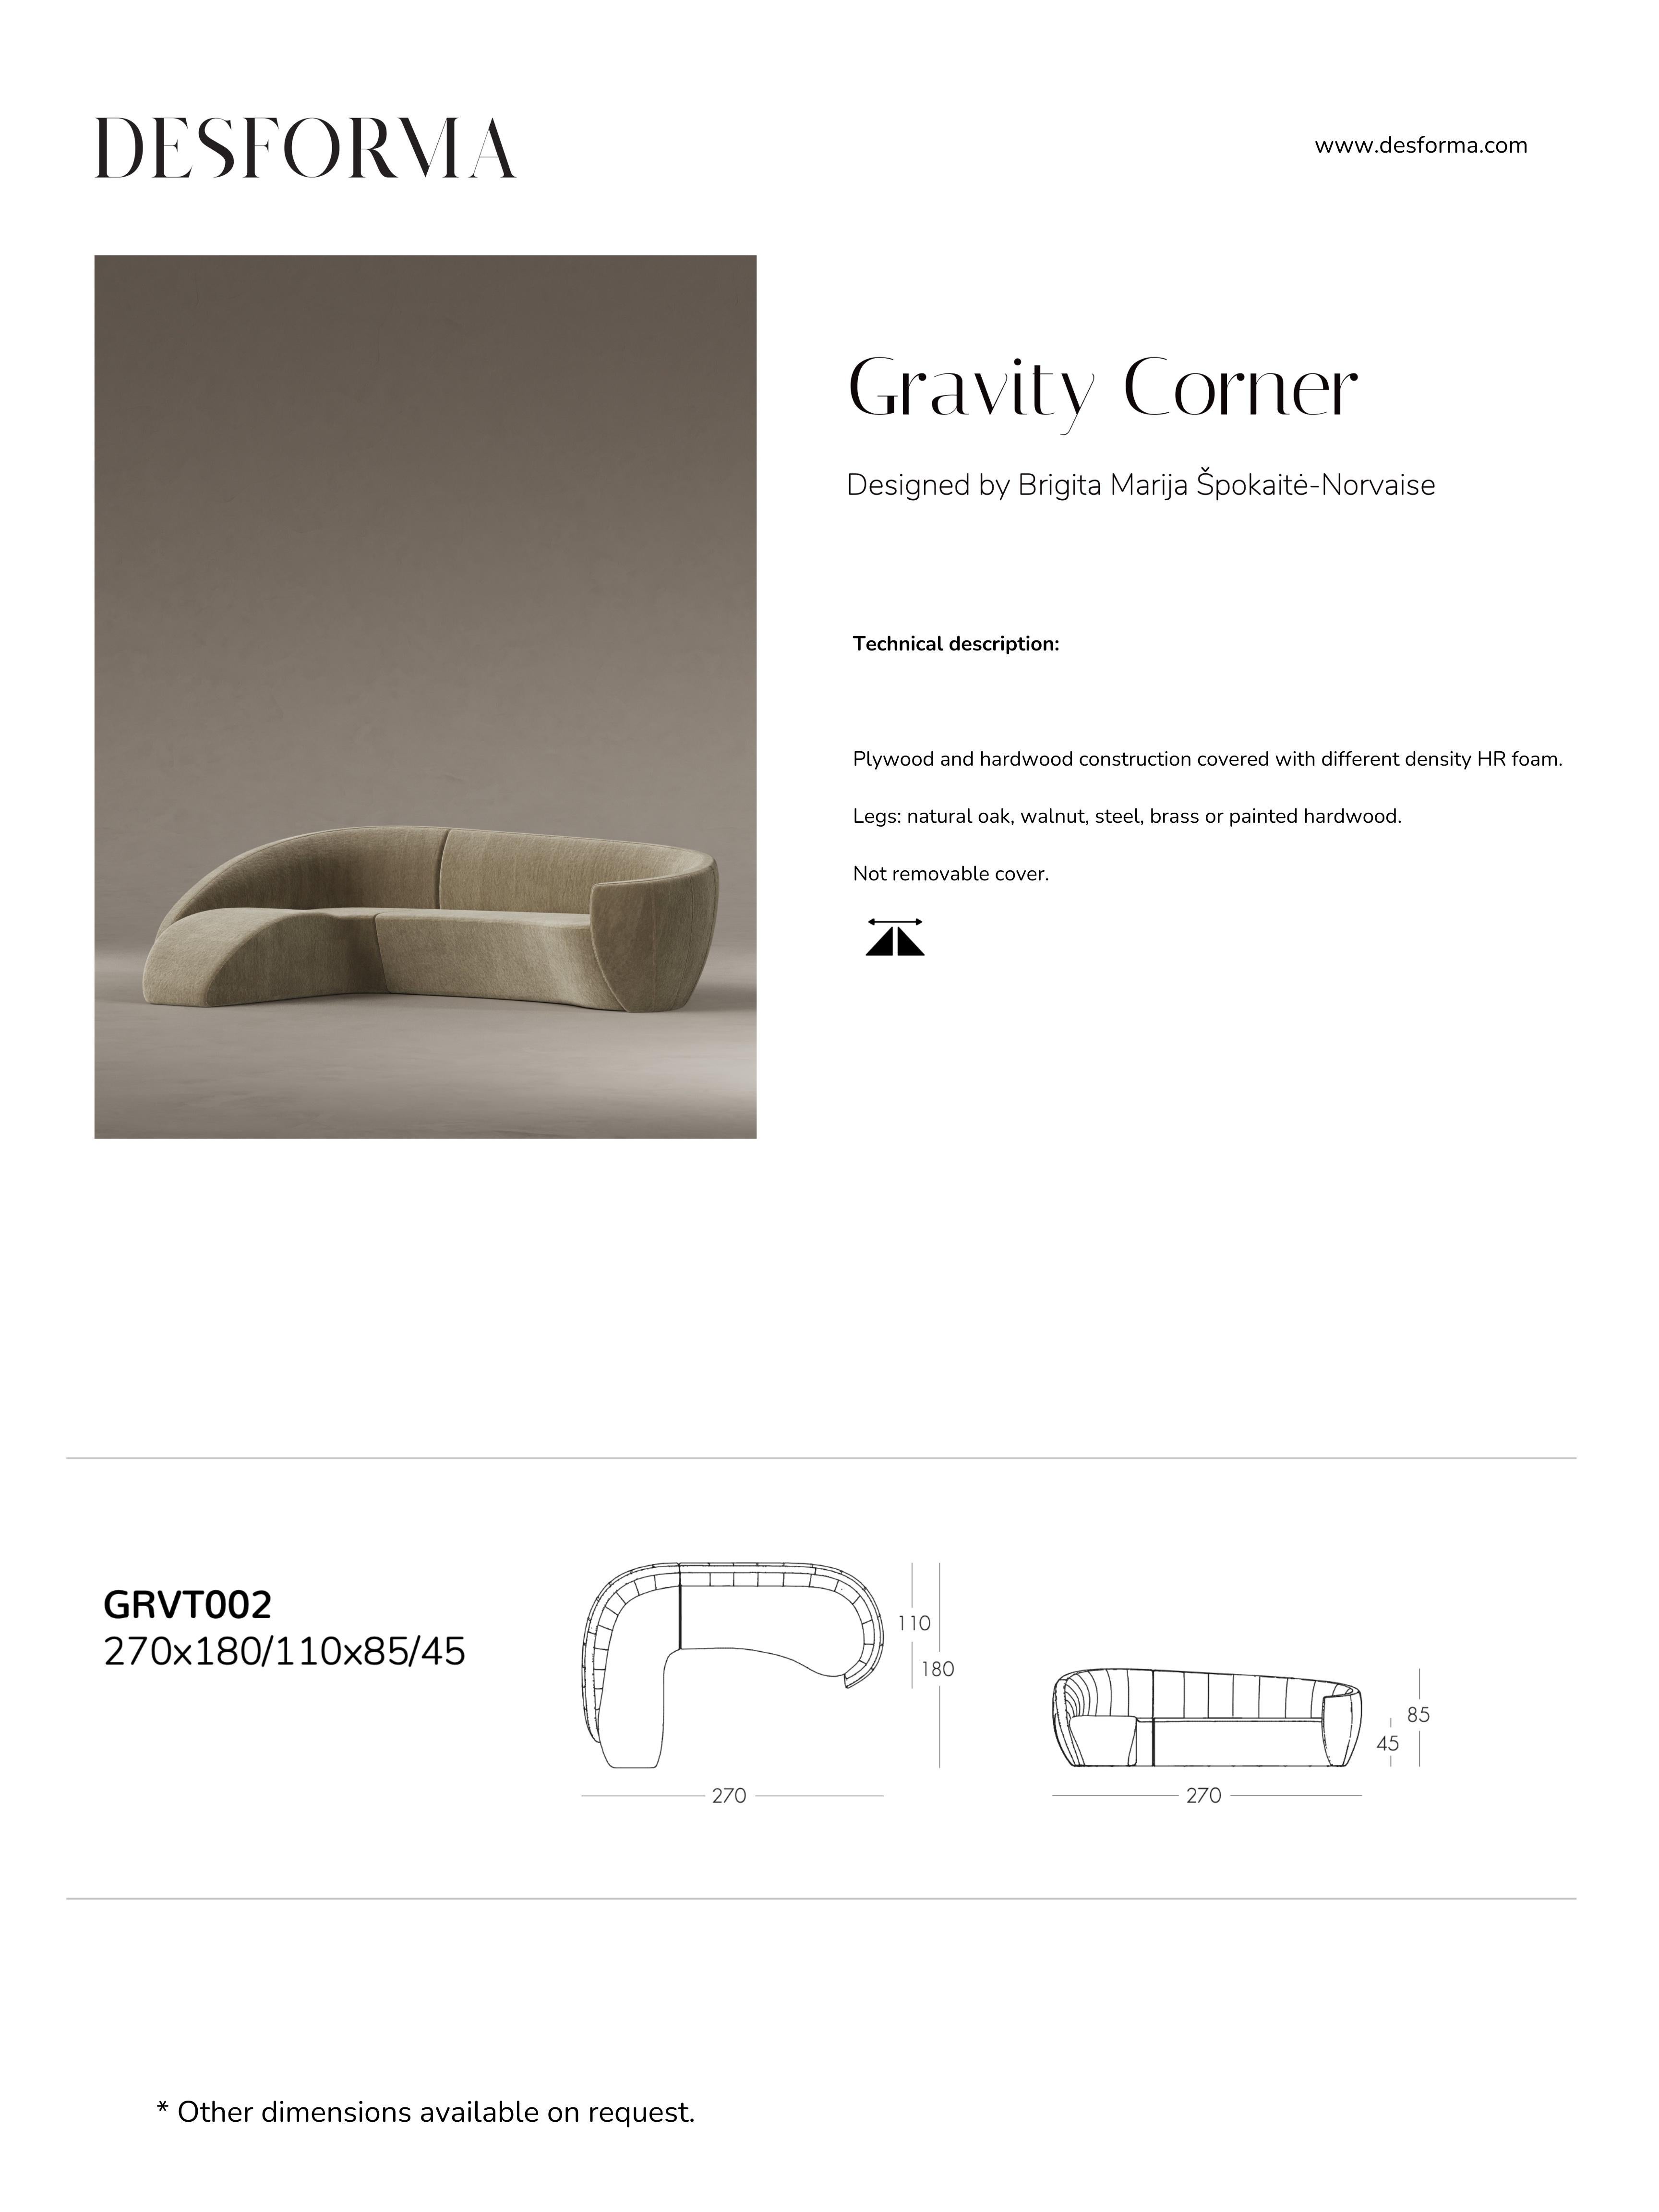 Moder Mid Century Handmade Gravity Corner sofa For Sale 3